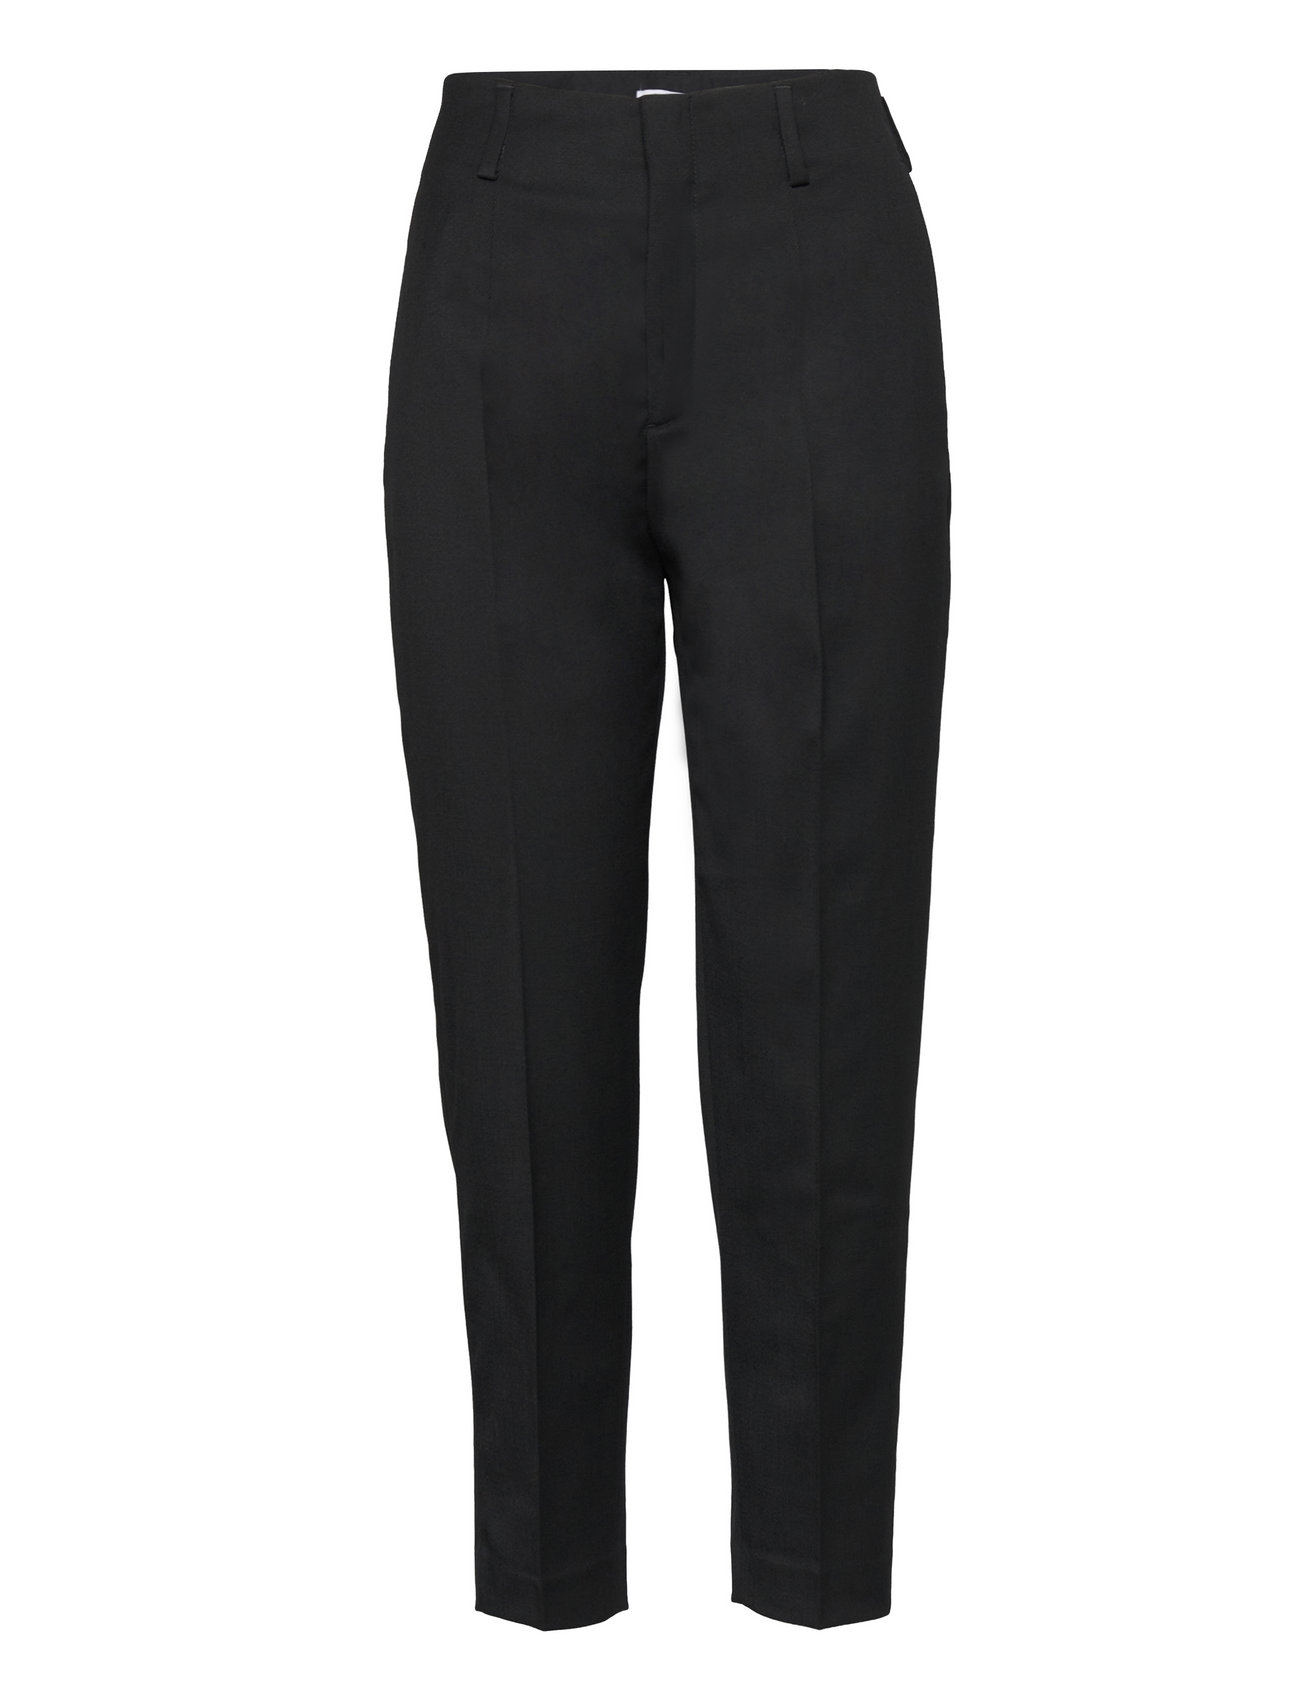 Karlie Trousers Designers Trousers Suitpants Black Filippa K